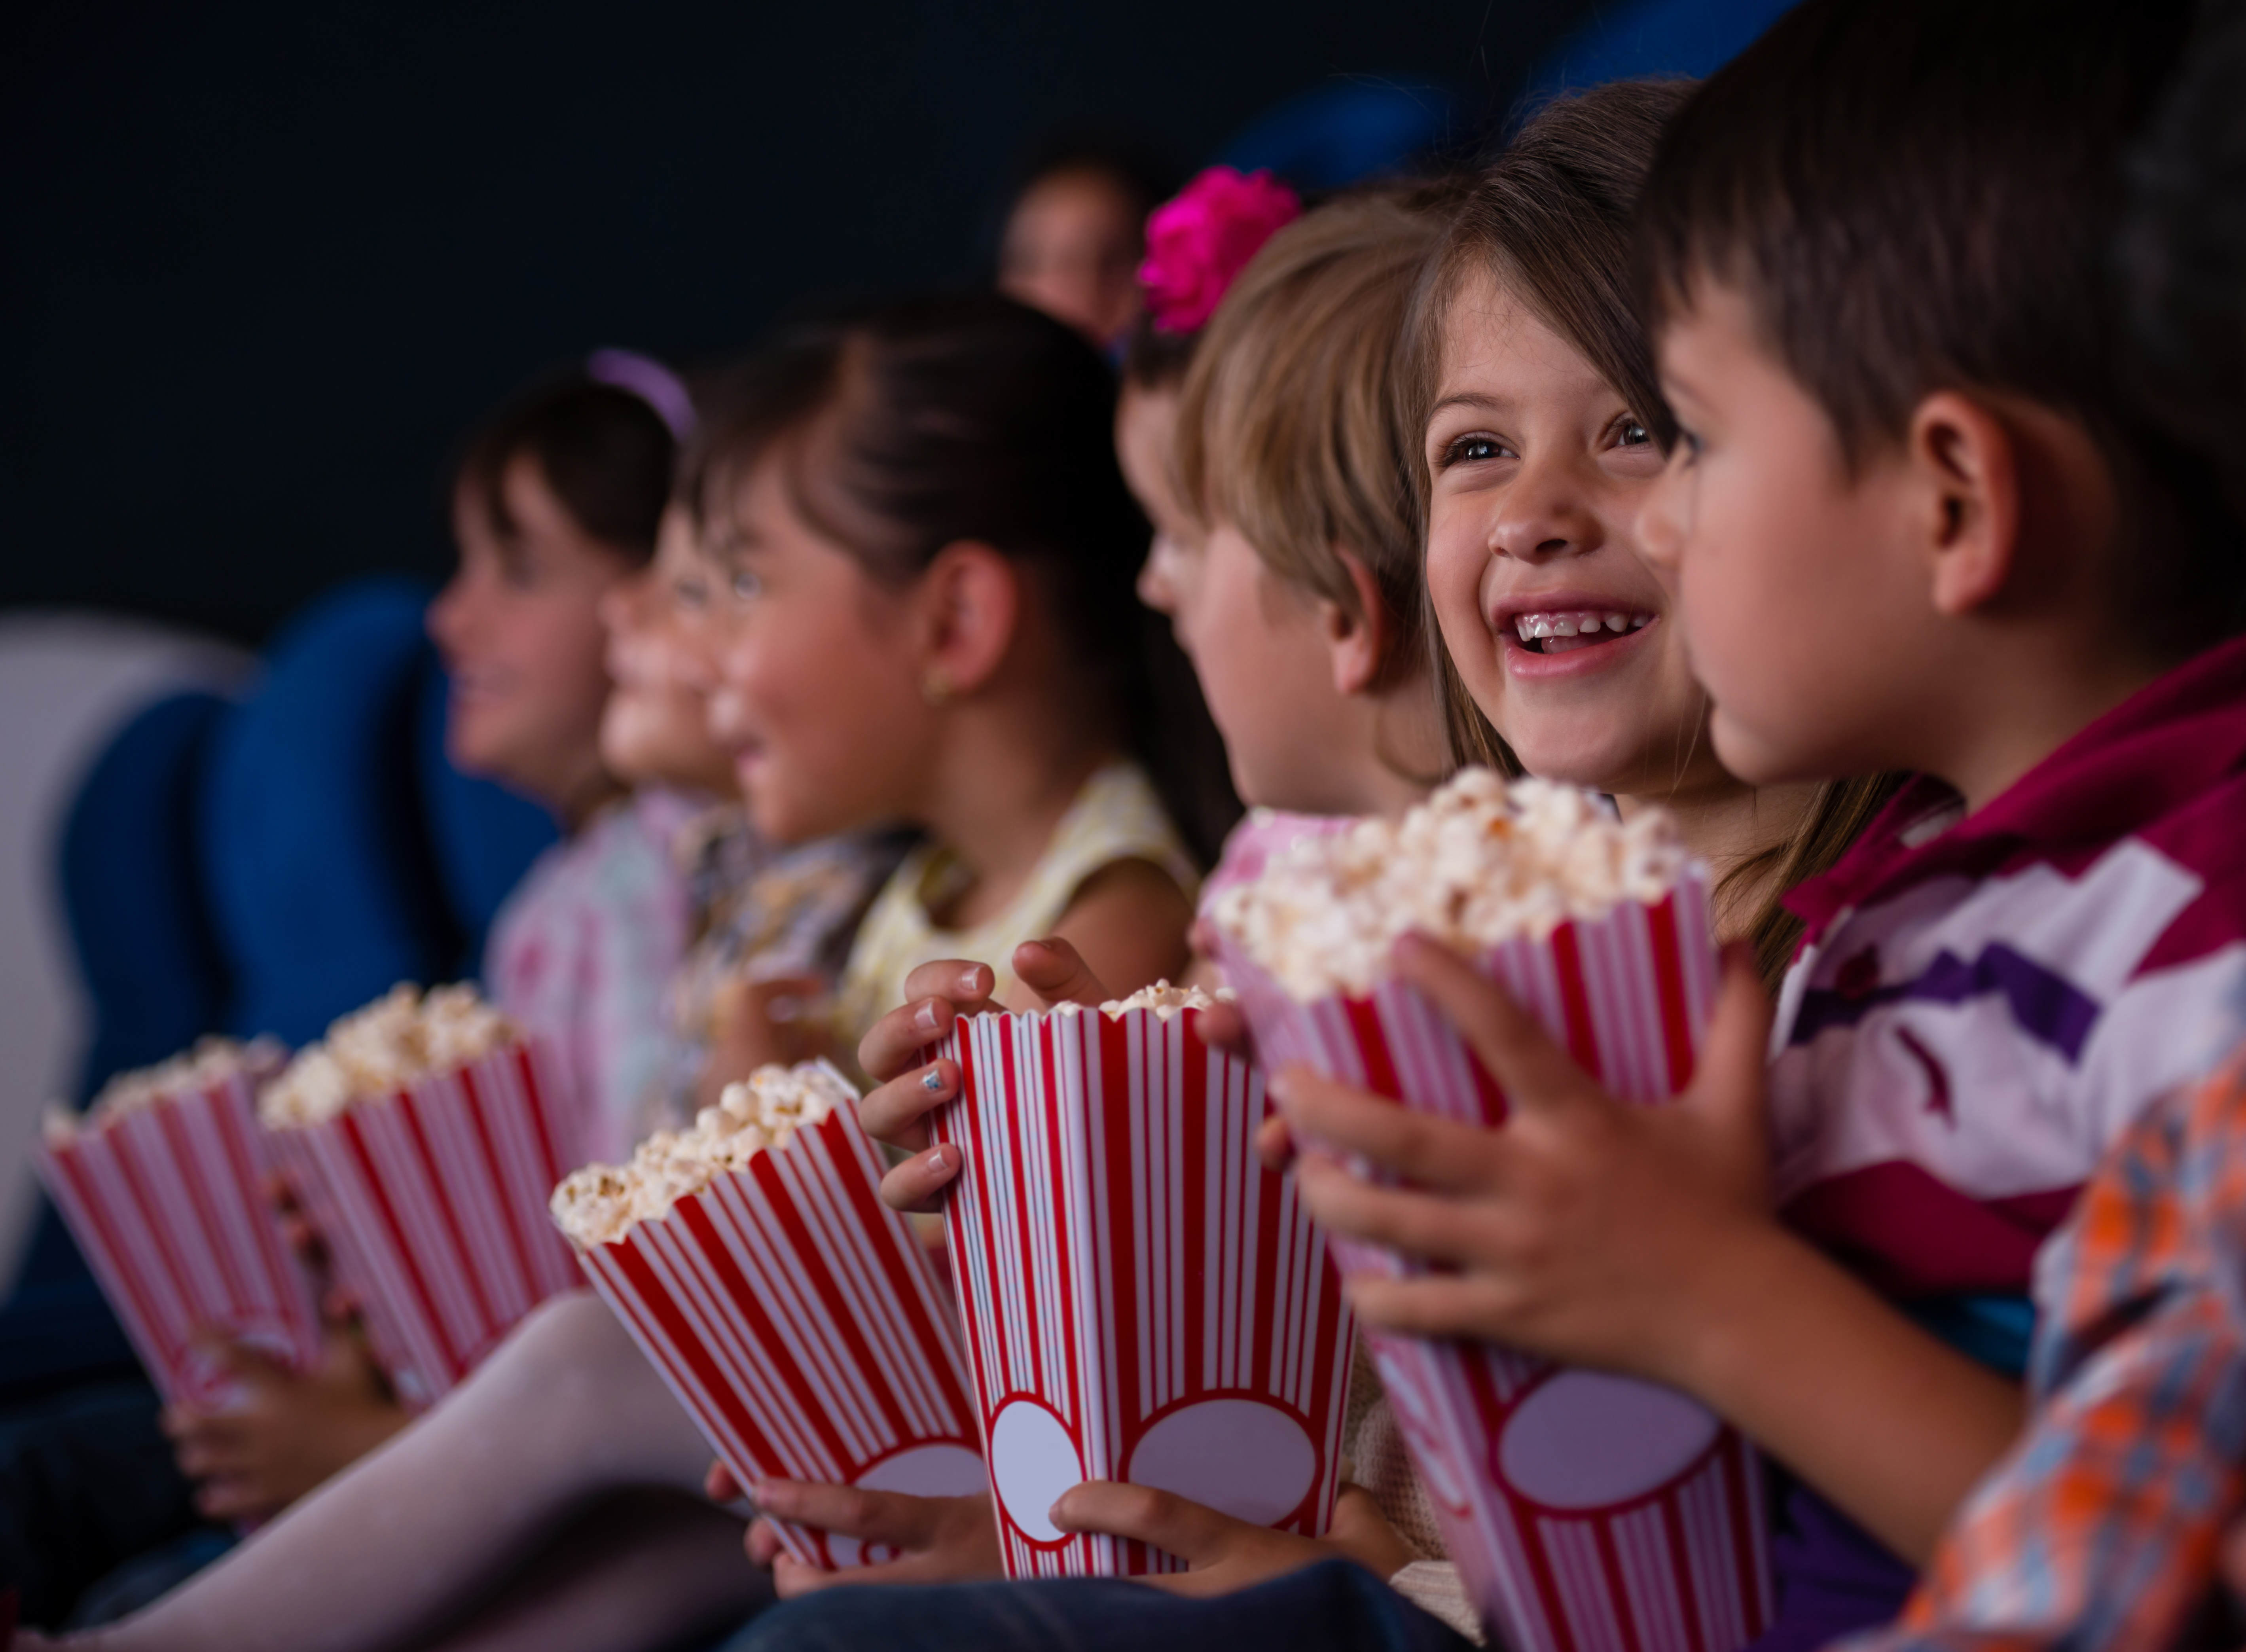 Children and theater. Дети в кинотеатре. Дети в кинотеатре с попкорном. Детский кинотеатр.